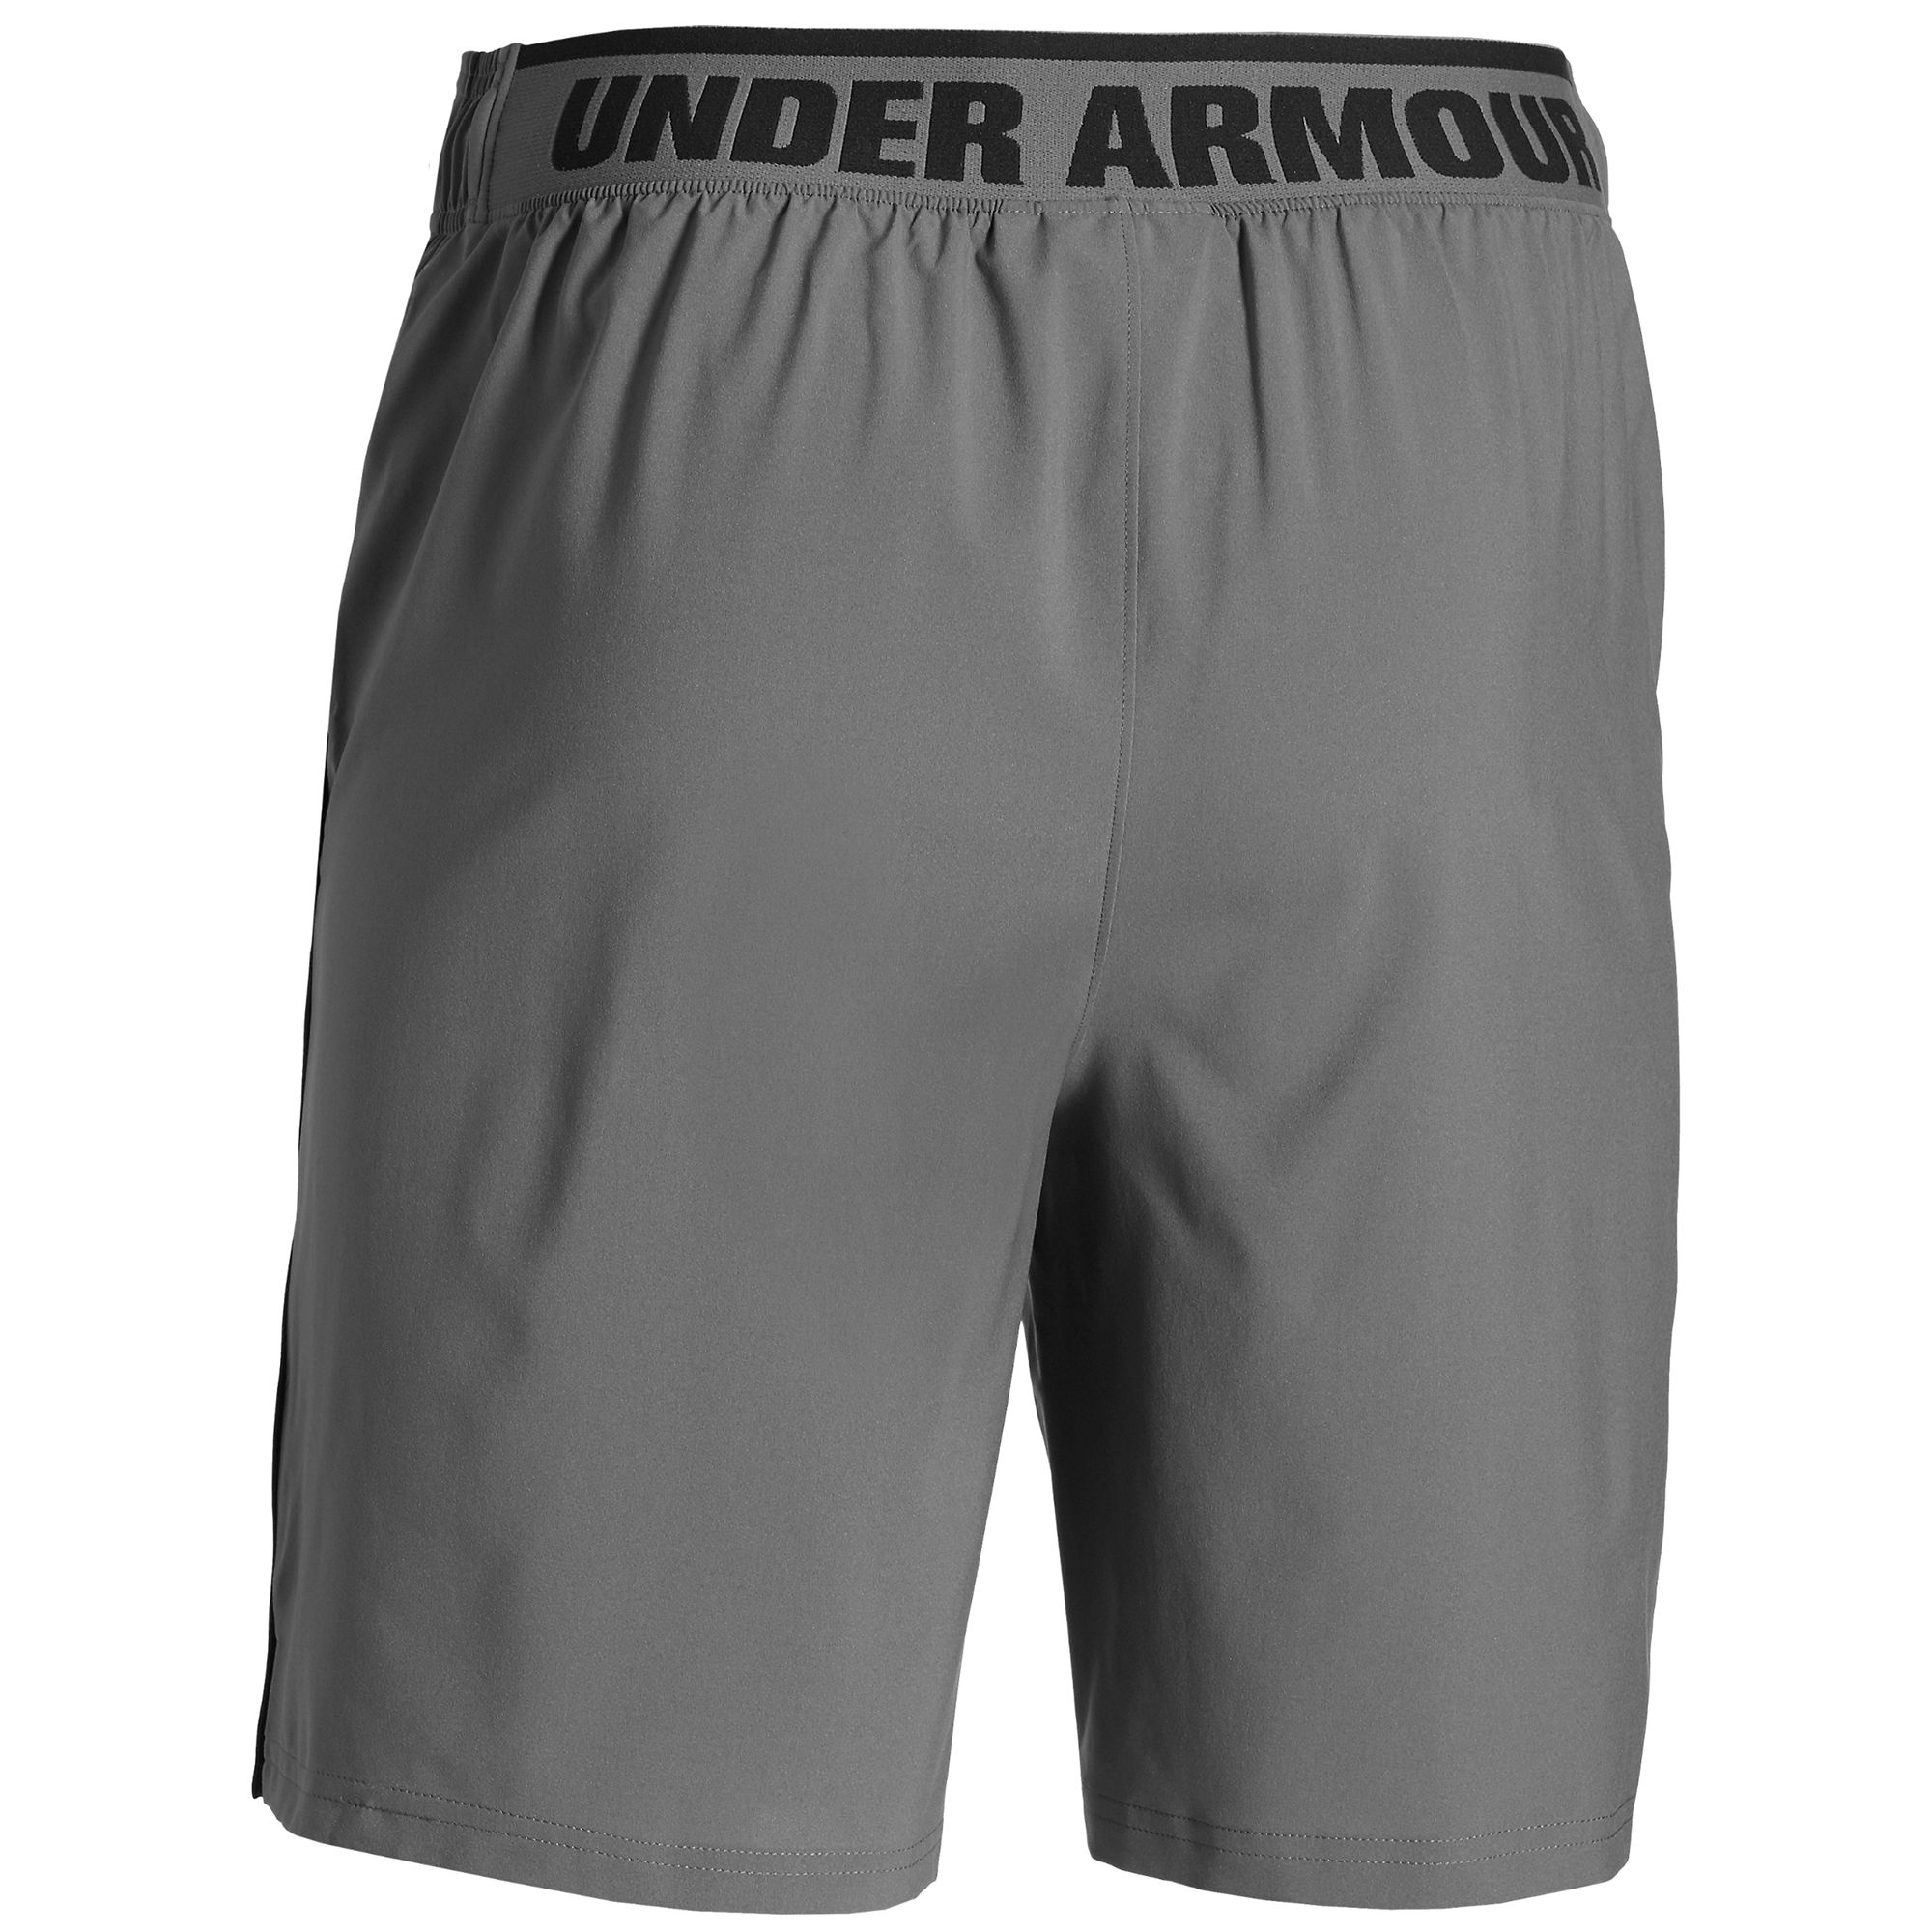 under armour mirage shorts